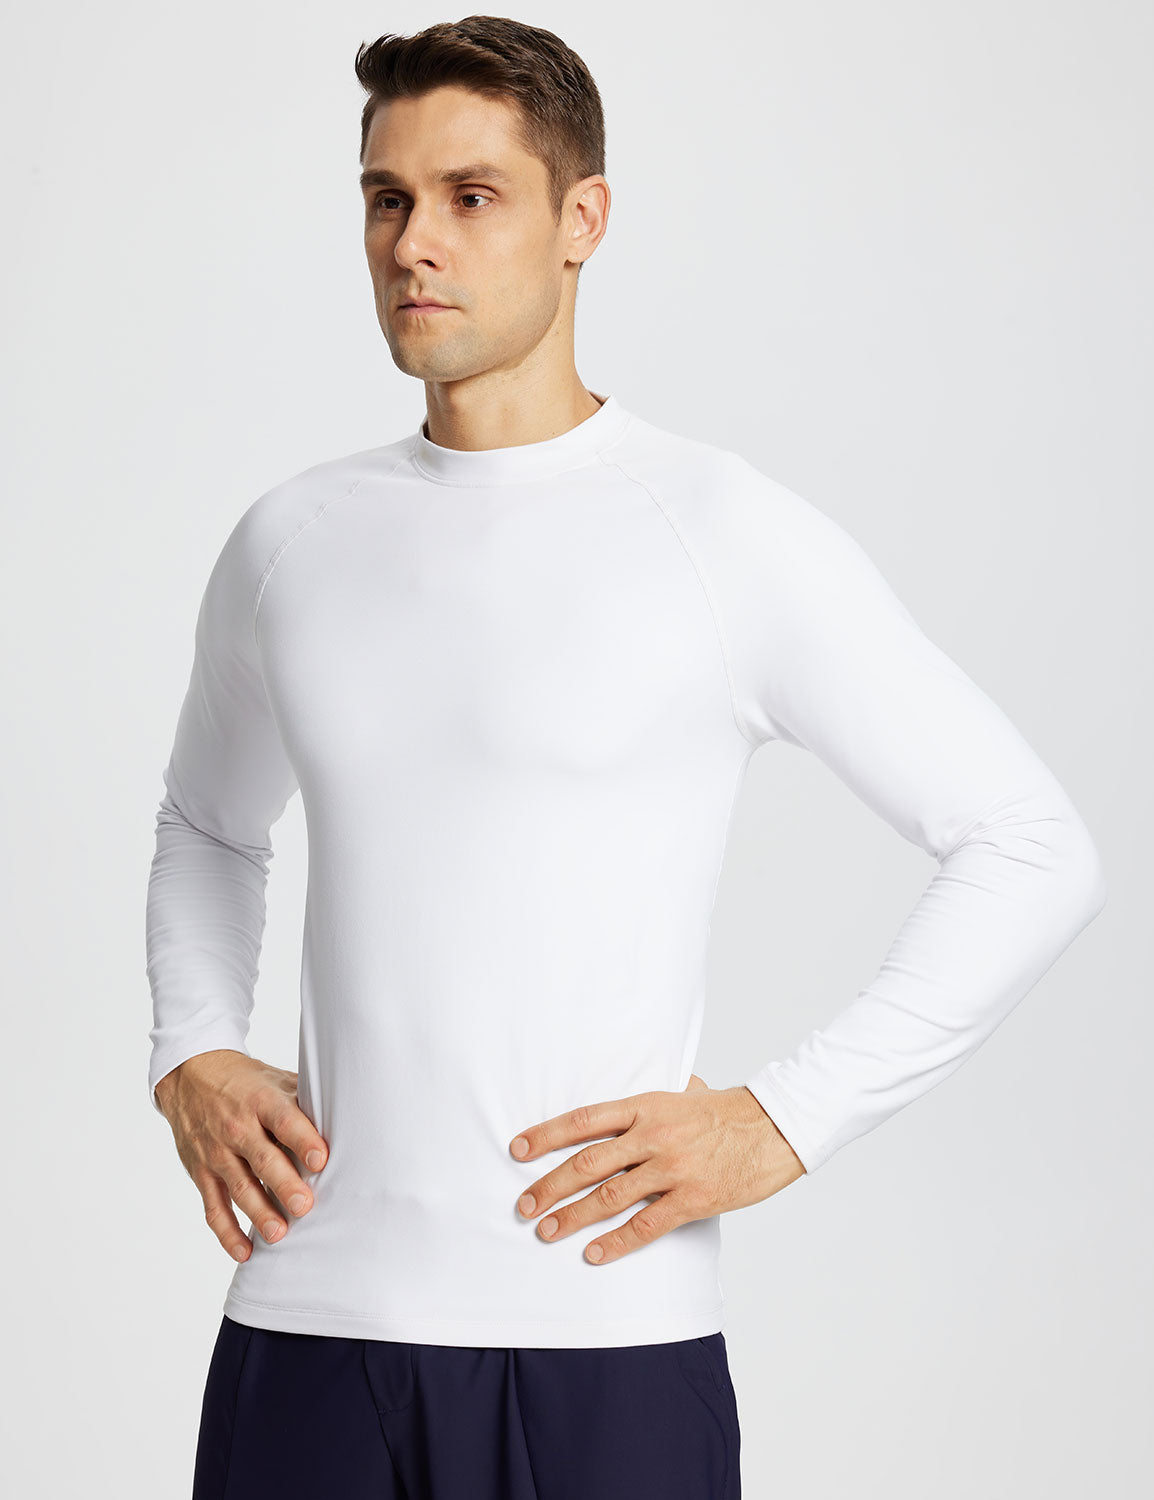 Baleaf Men's Laureate Thermal Crew Neck T-Shirt dbd084 Lucent White Main